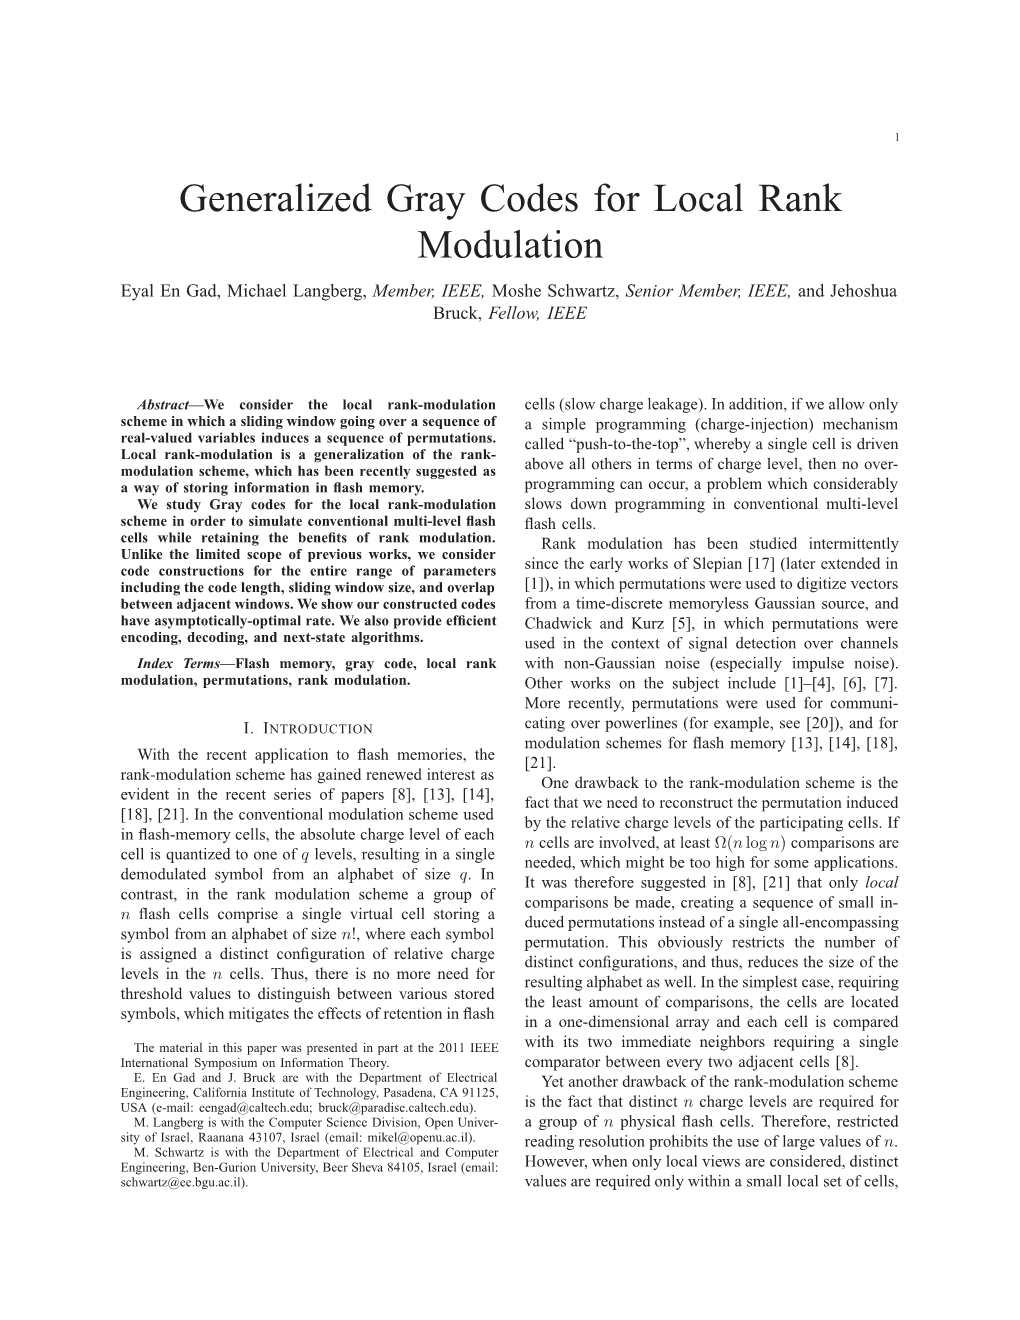 Generalized Gray Codes for Local Rank Modulation Eyal En Gad, Michael Langberg, Member, IEEE, Moshe Schwartz, Senior Member, IEEE, and Jehoshua Bruck, Fellow, IEEE